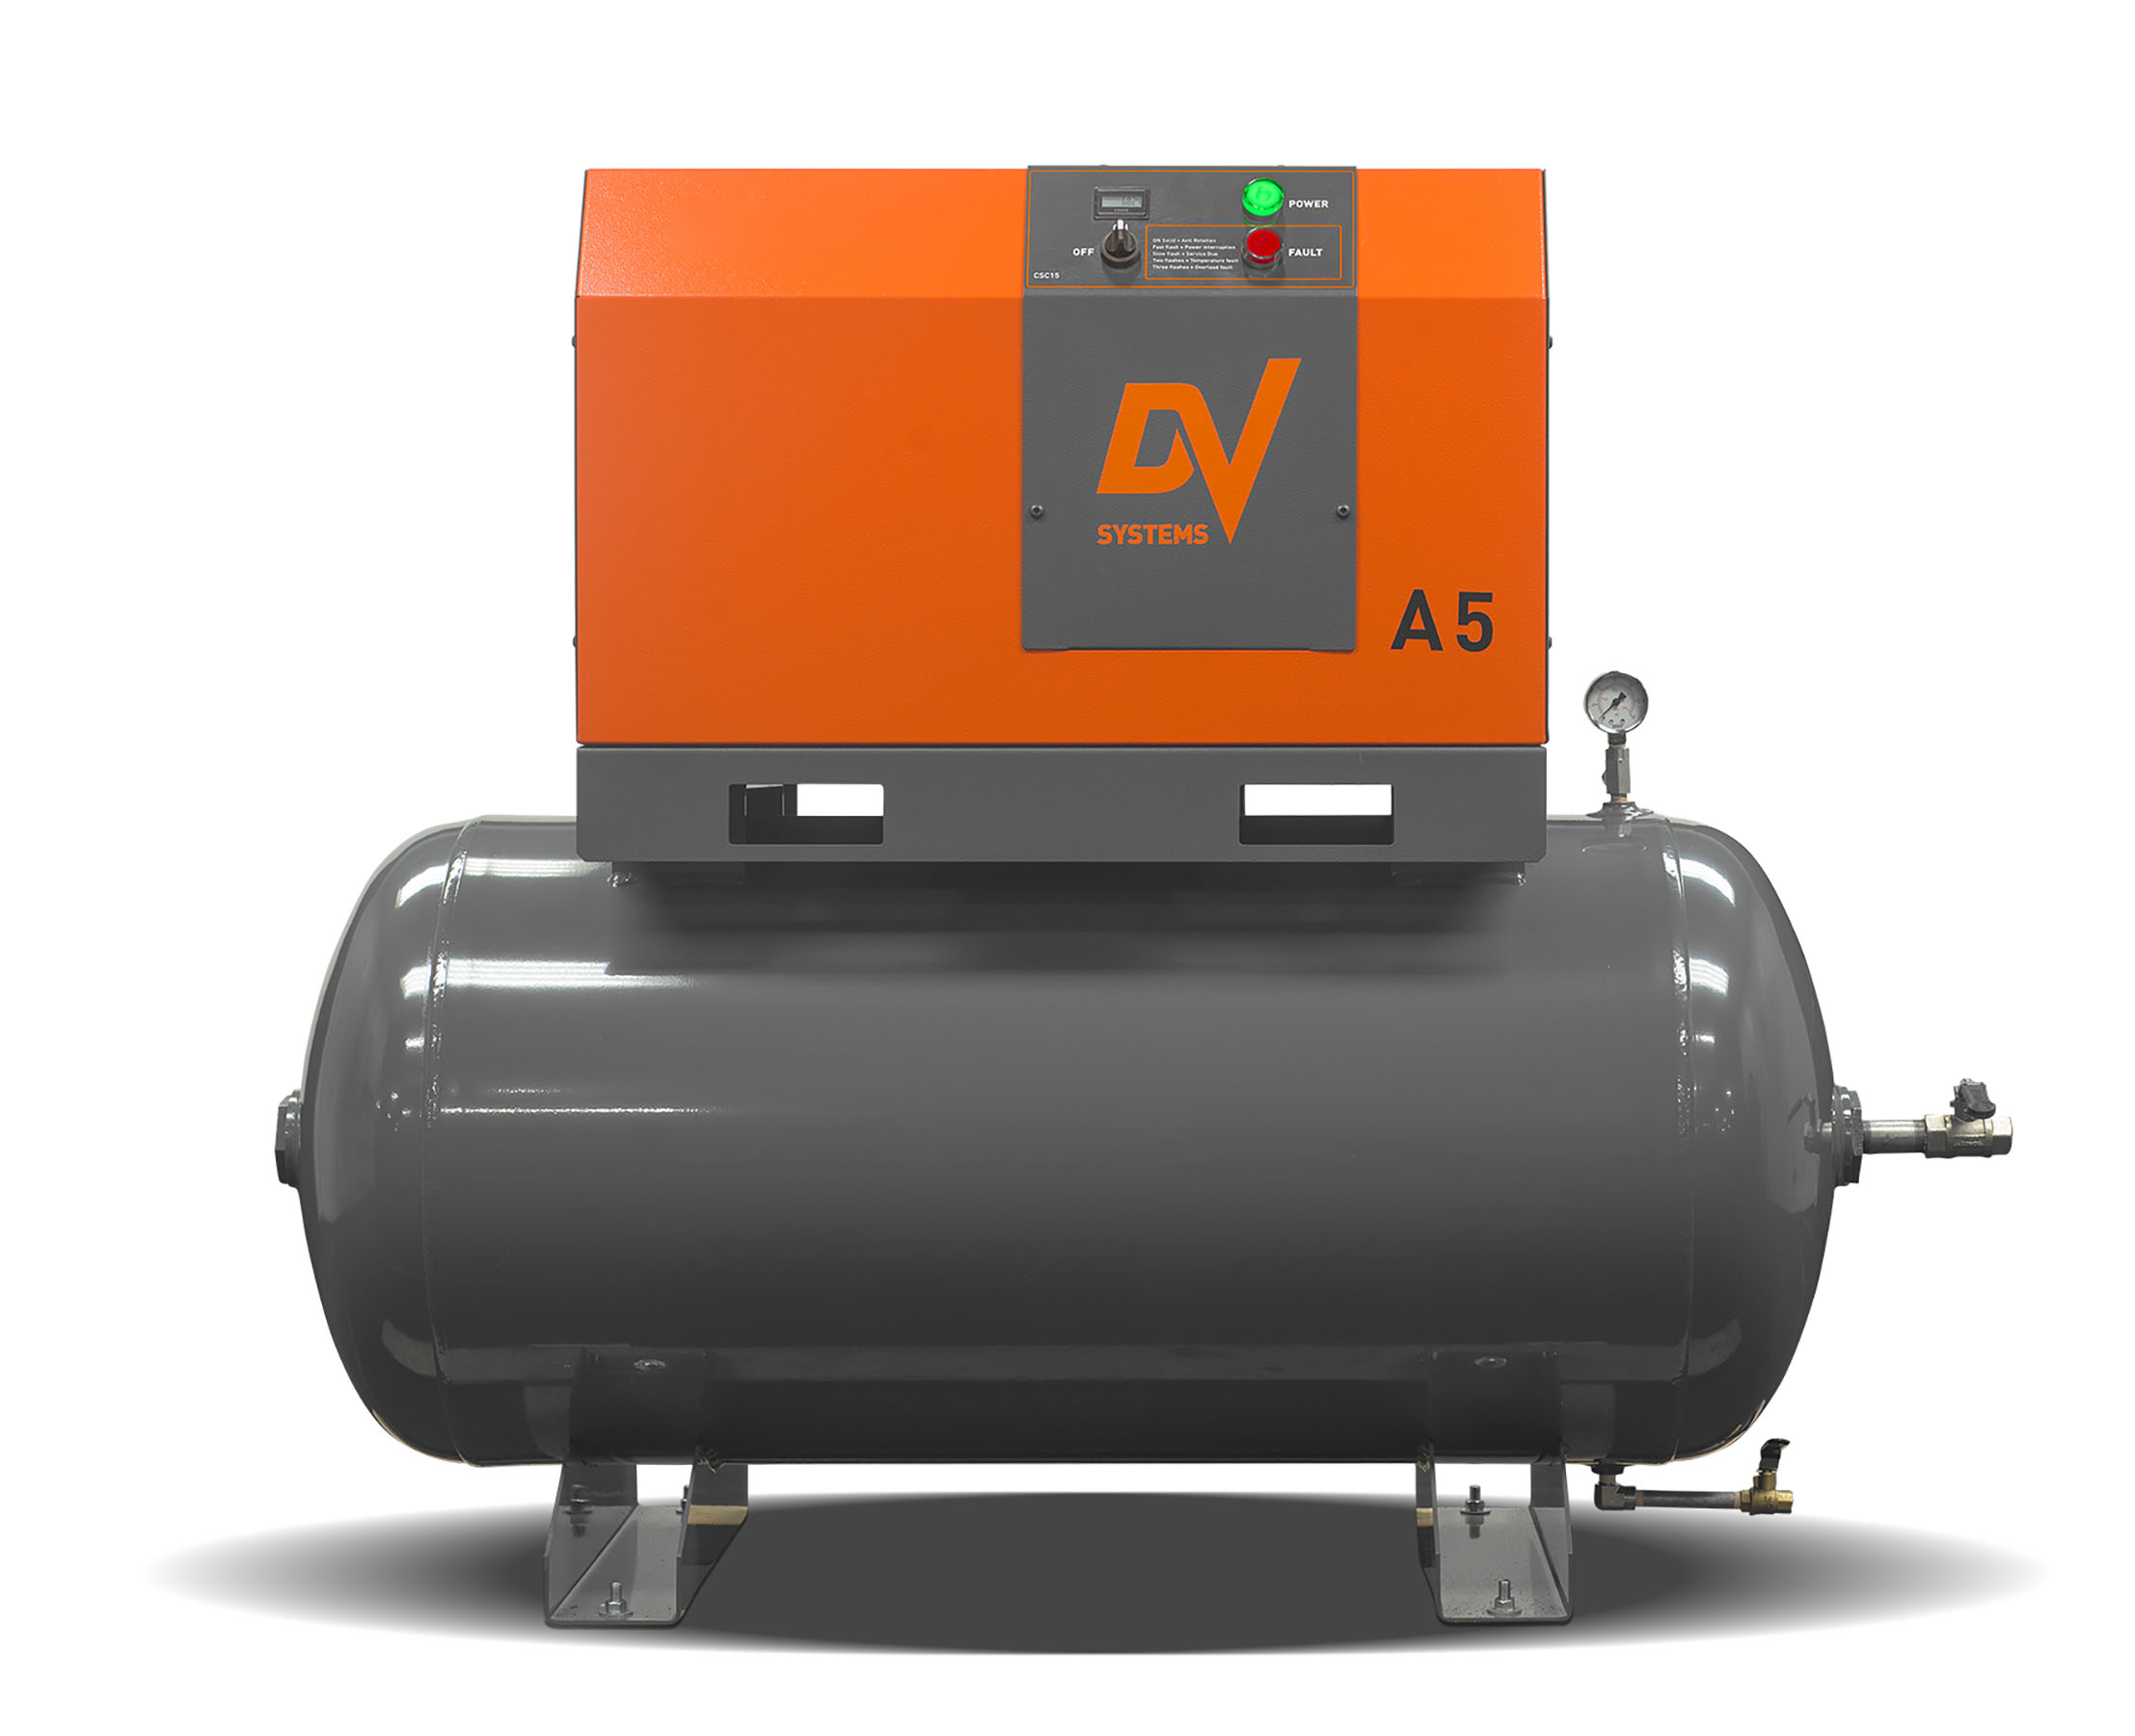 DV Systems A5 Rotary Screw Air Compressor